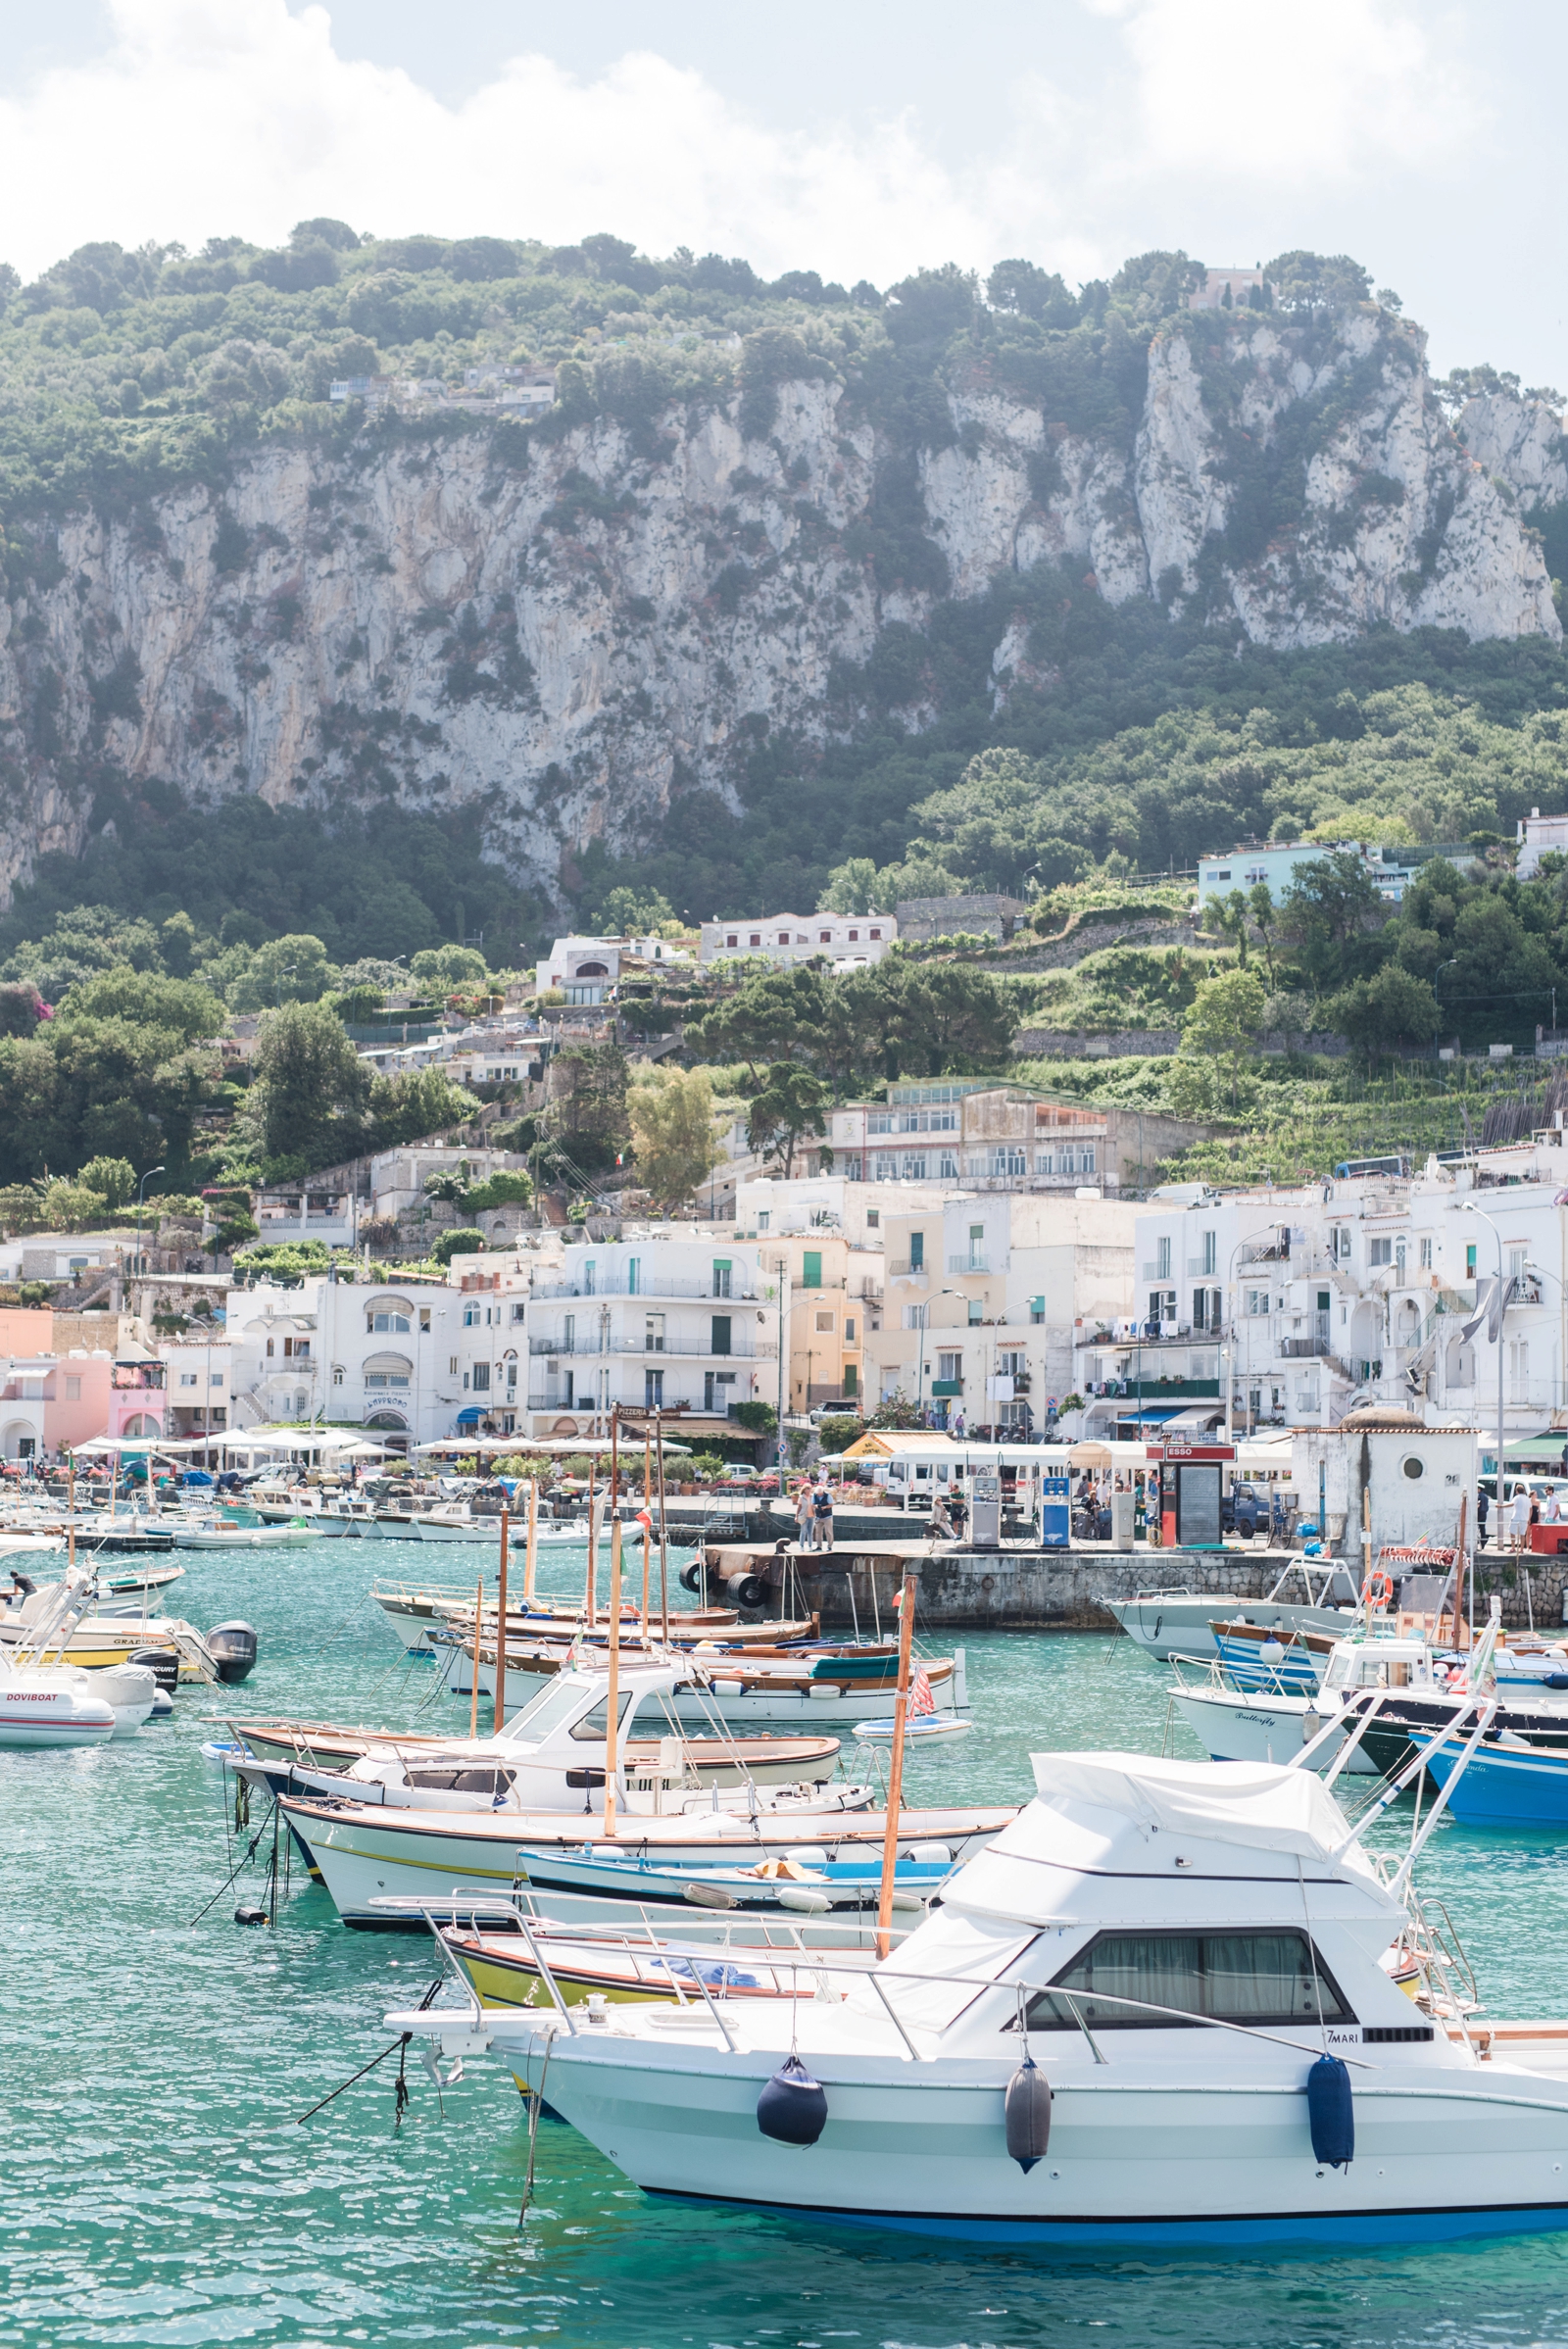 capri-italy-amalfi-coast-via-mediterranean-cruise-carnival-vista-photo_5555.jpg